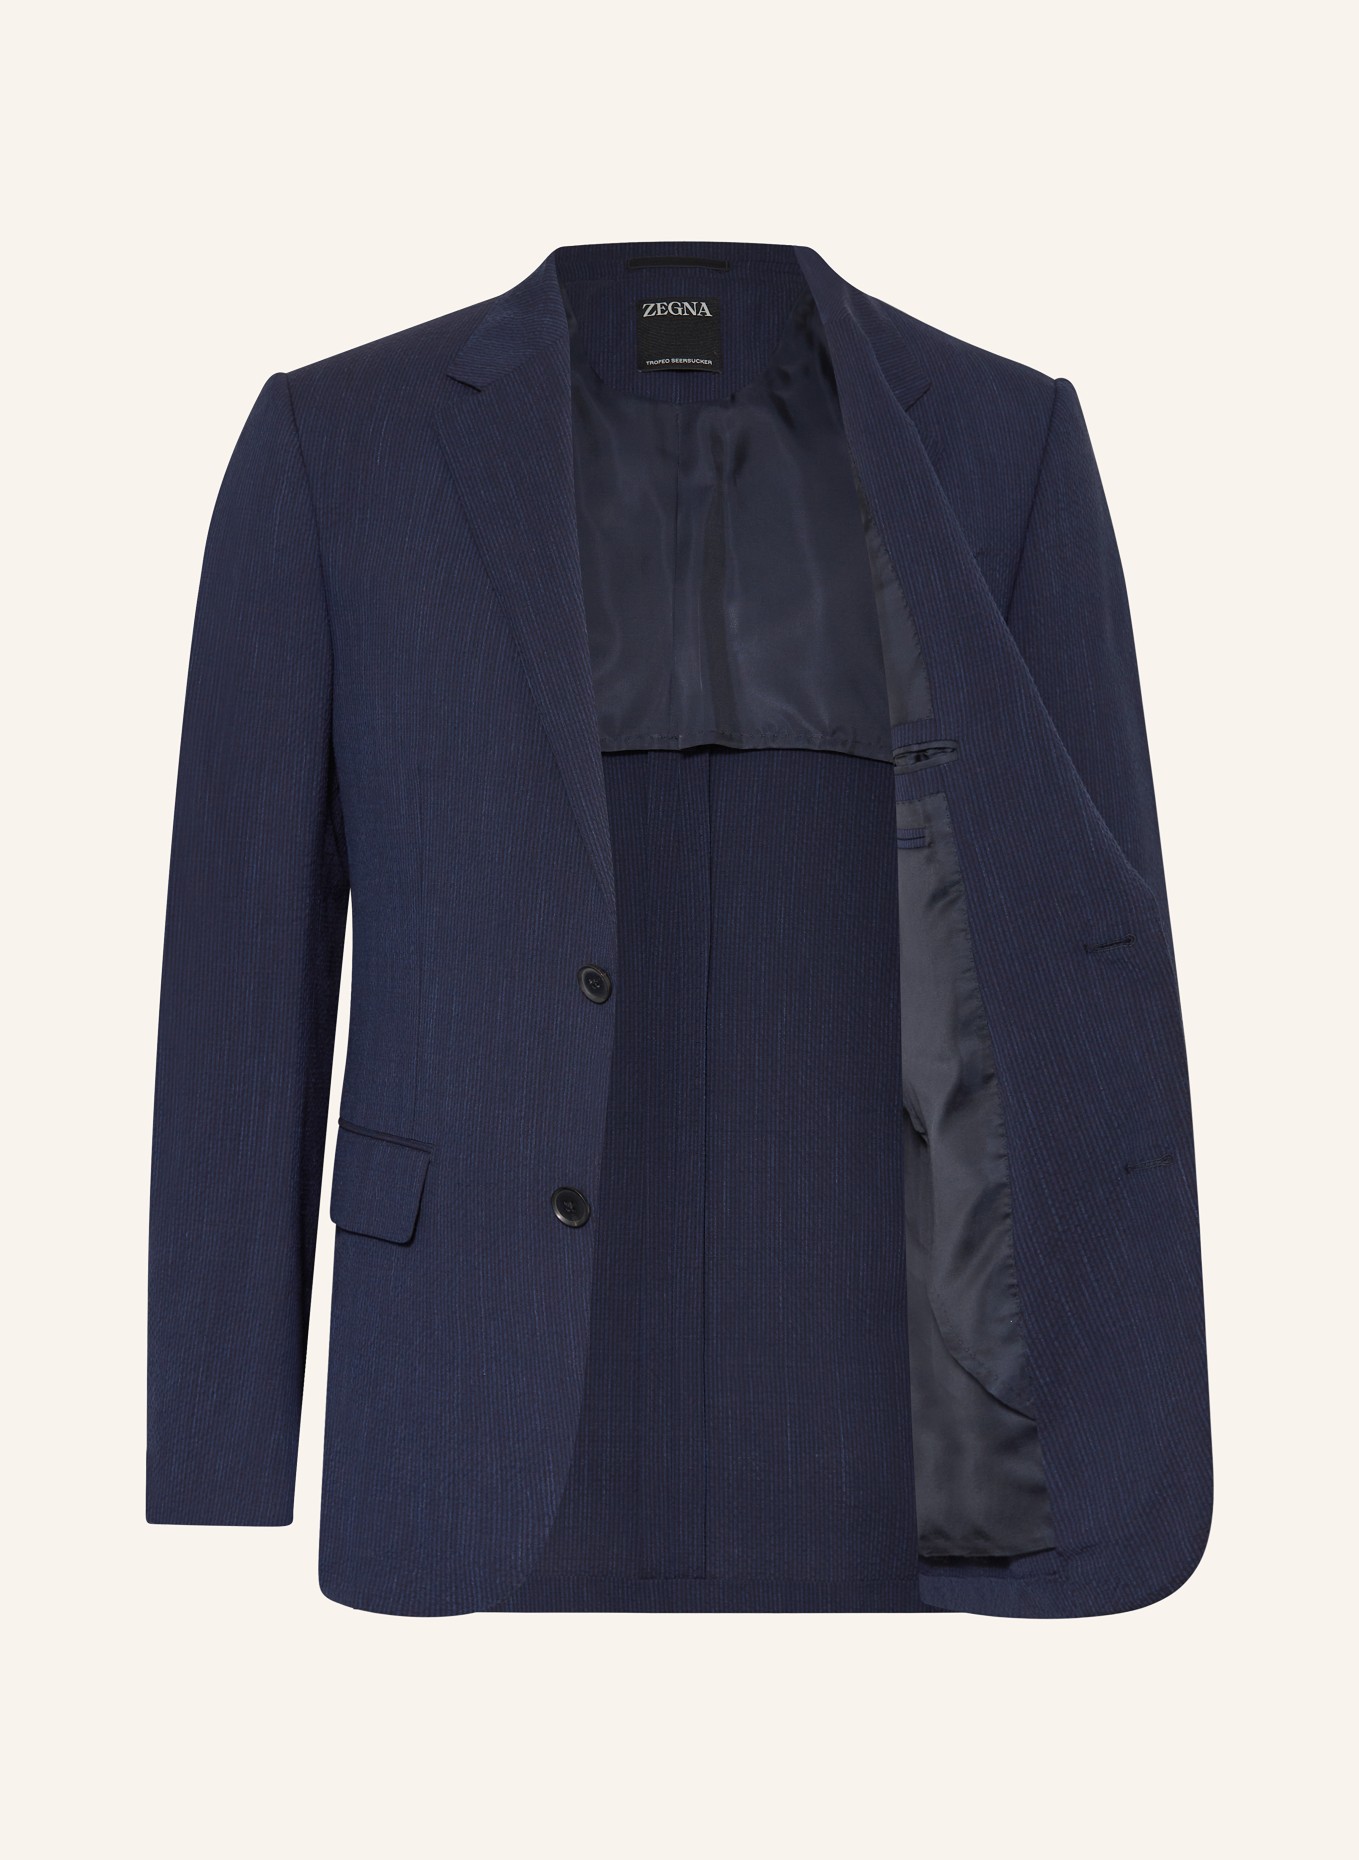 ZEGNA Suit jacket regular fit in merino wool, Color: DARK BLUE (Image 4)